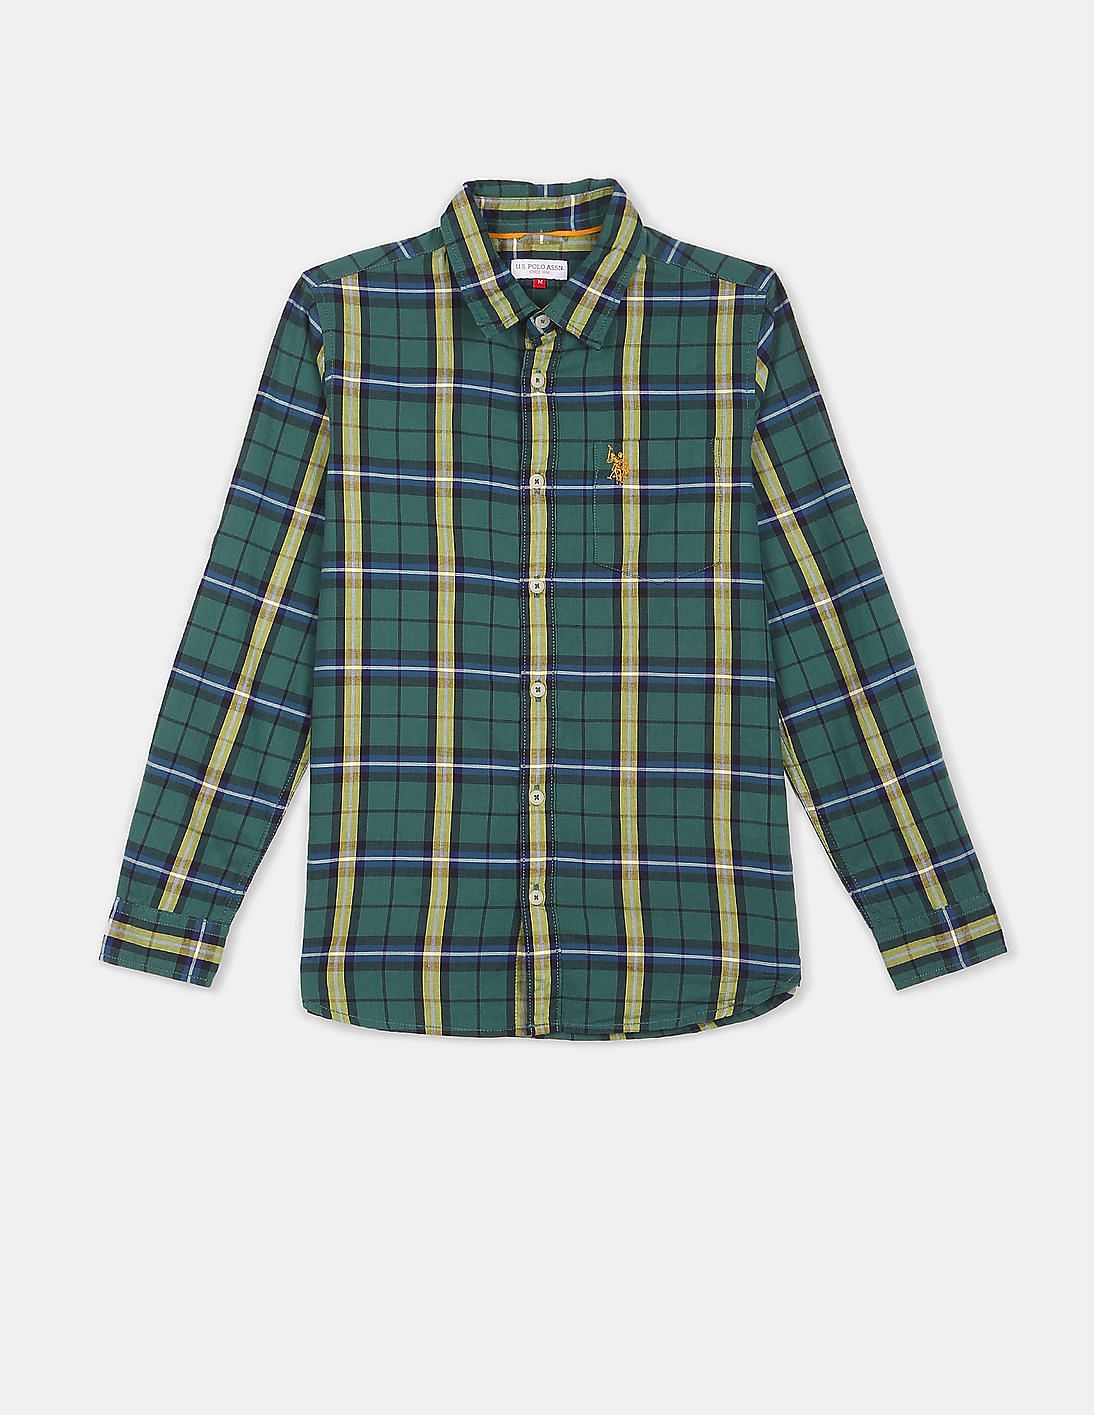 Buy U.S. Polo Assn. Kids Boys Spread Collar Check Shirt - NNNOW.com